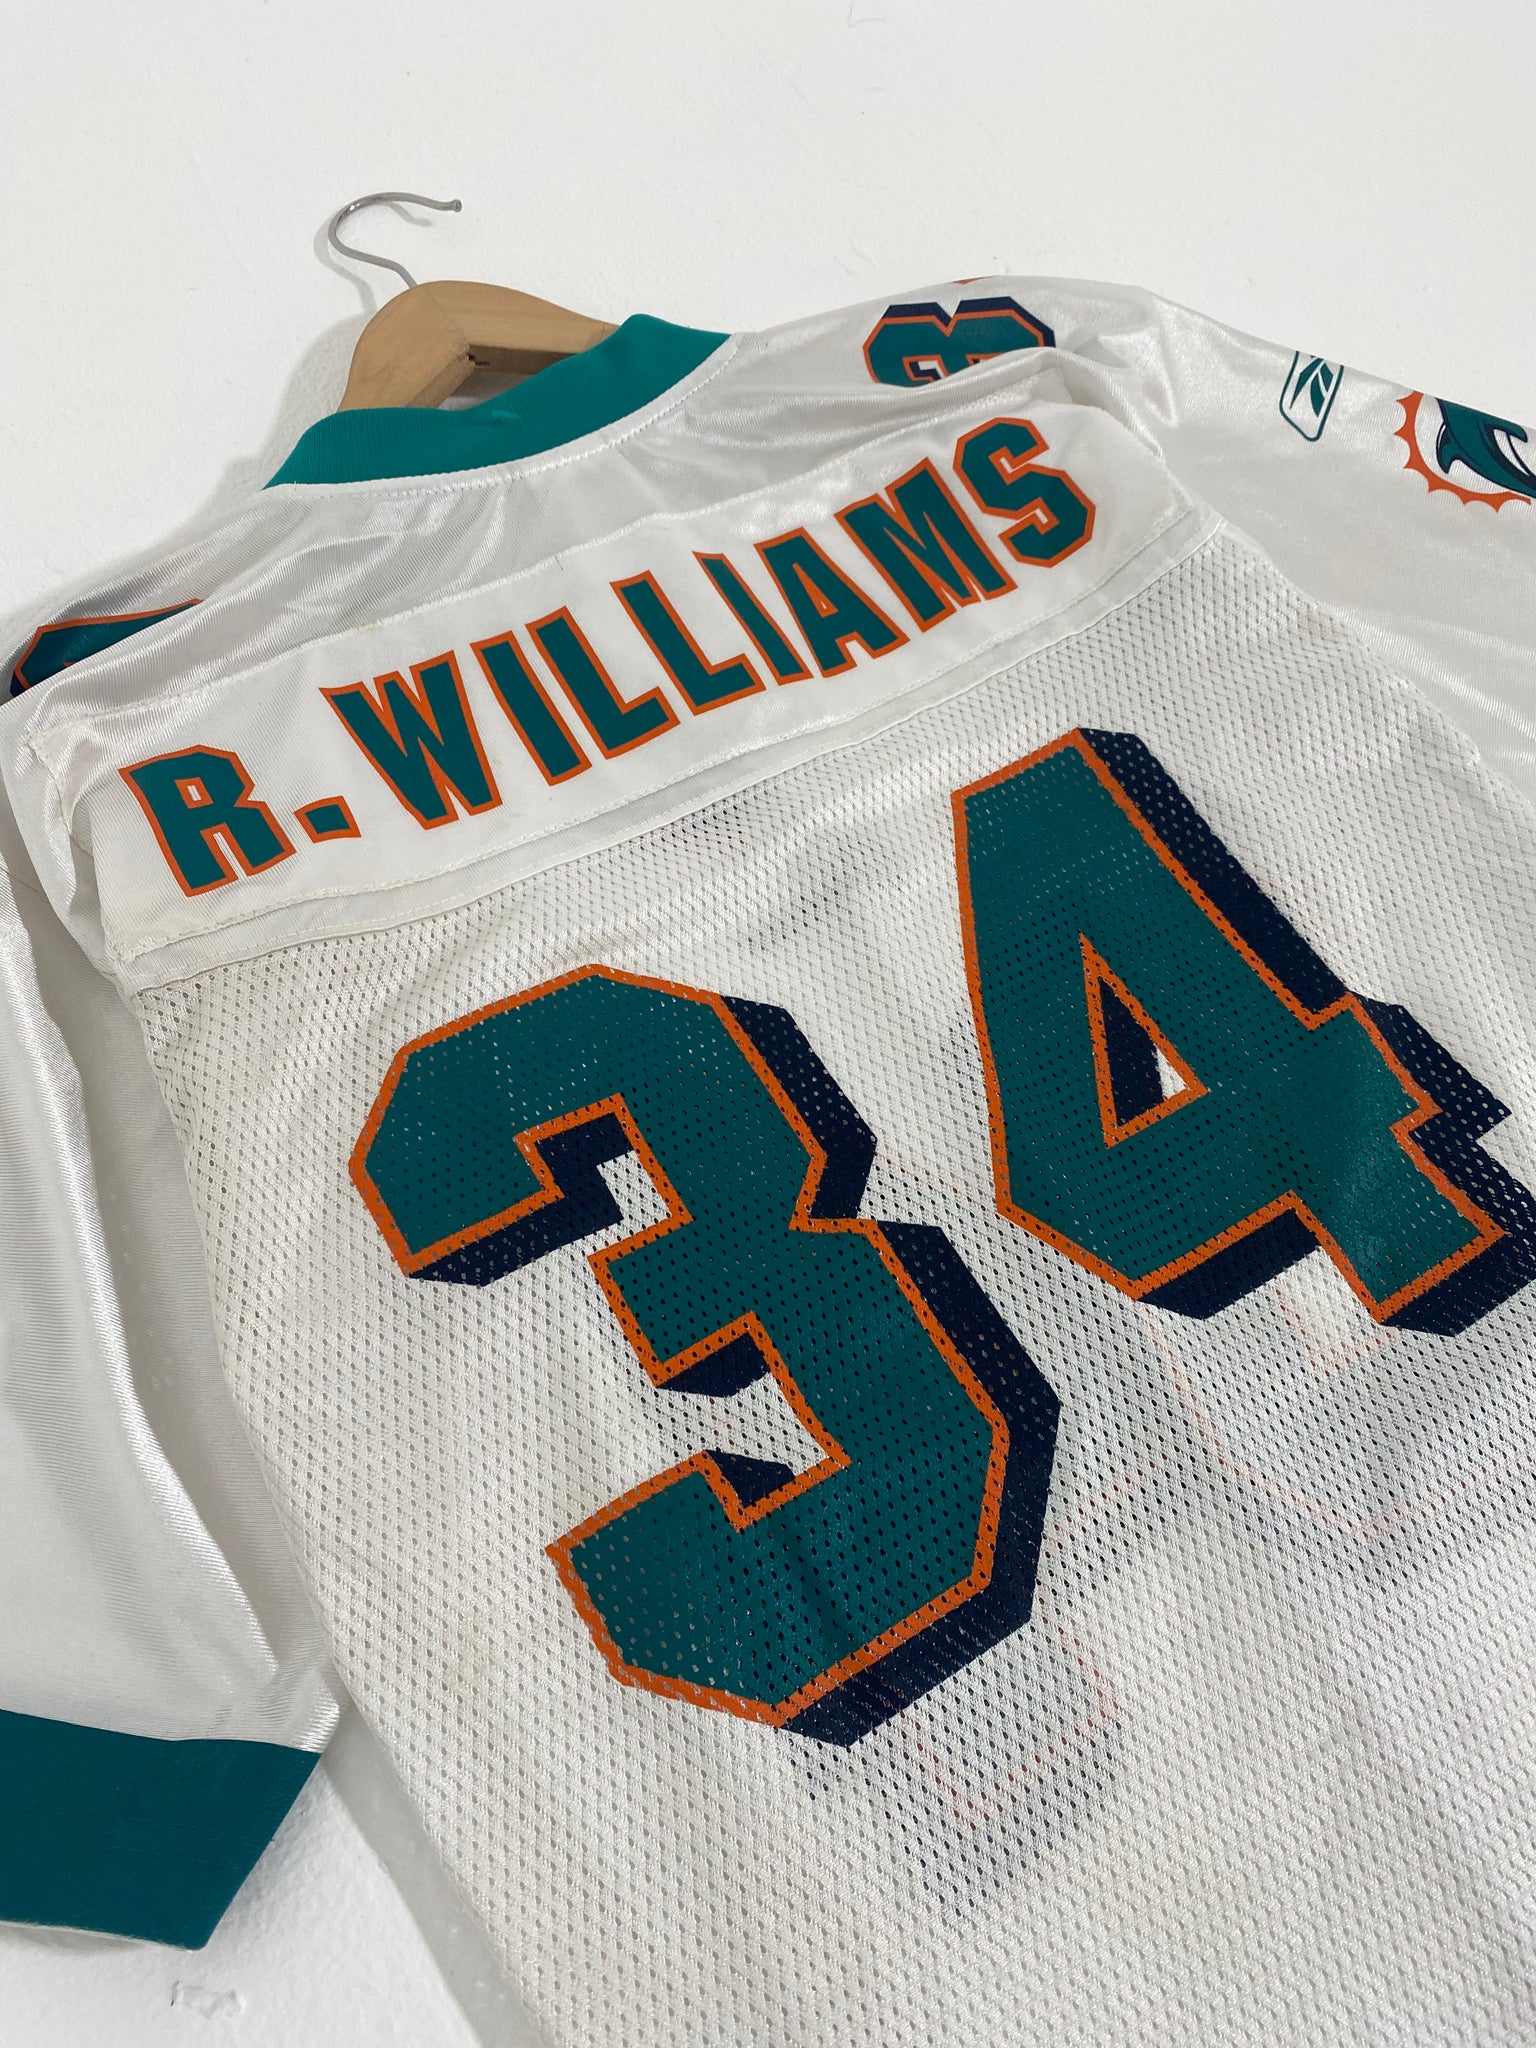 Ricky Williams Dolphins jersey - XL $40 obo